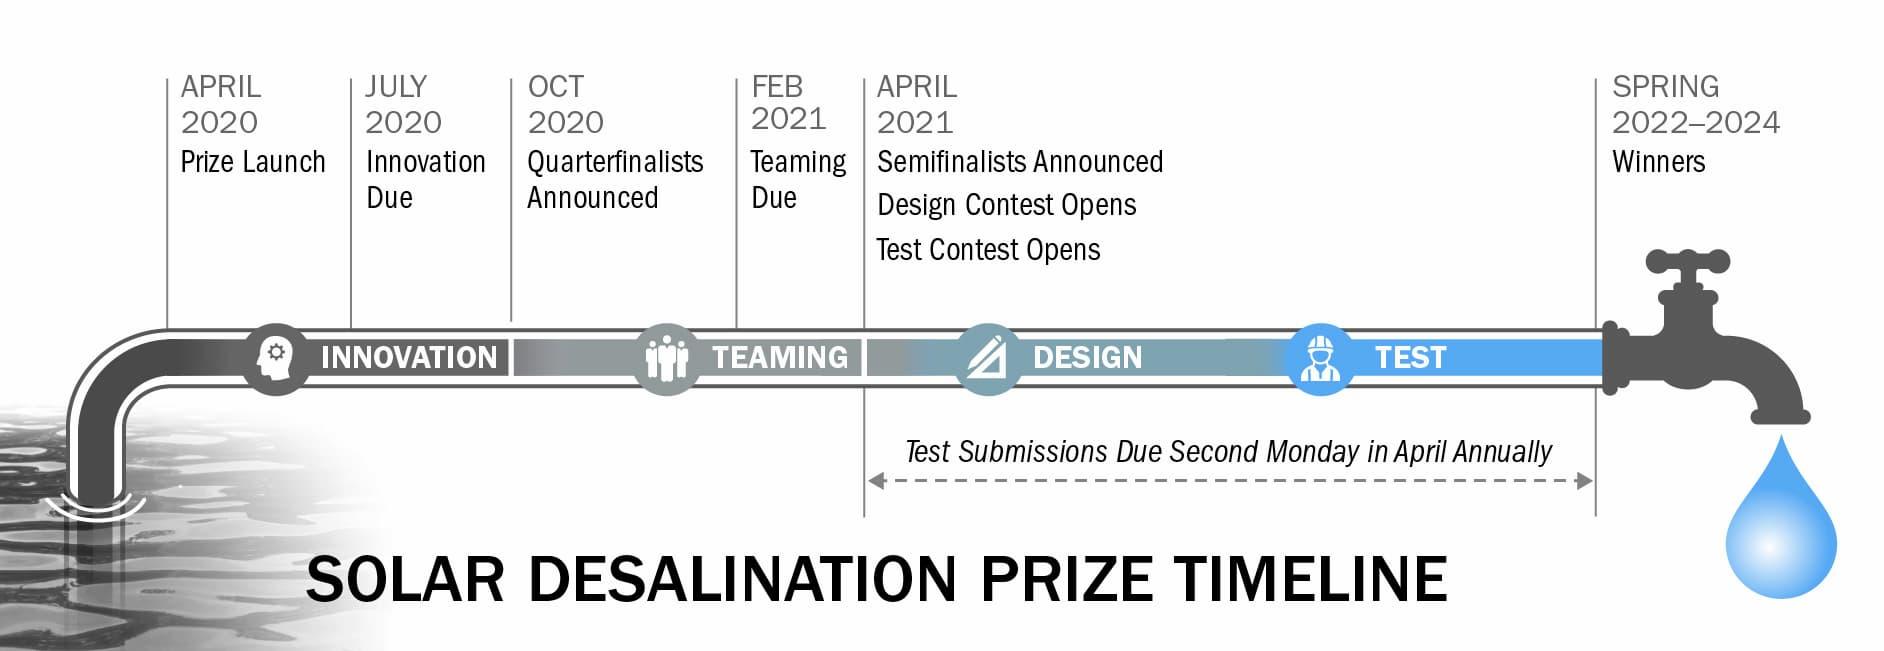 Timeline graphic for Solar Desalination Prize